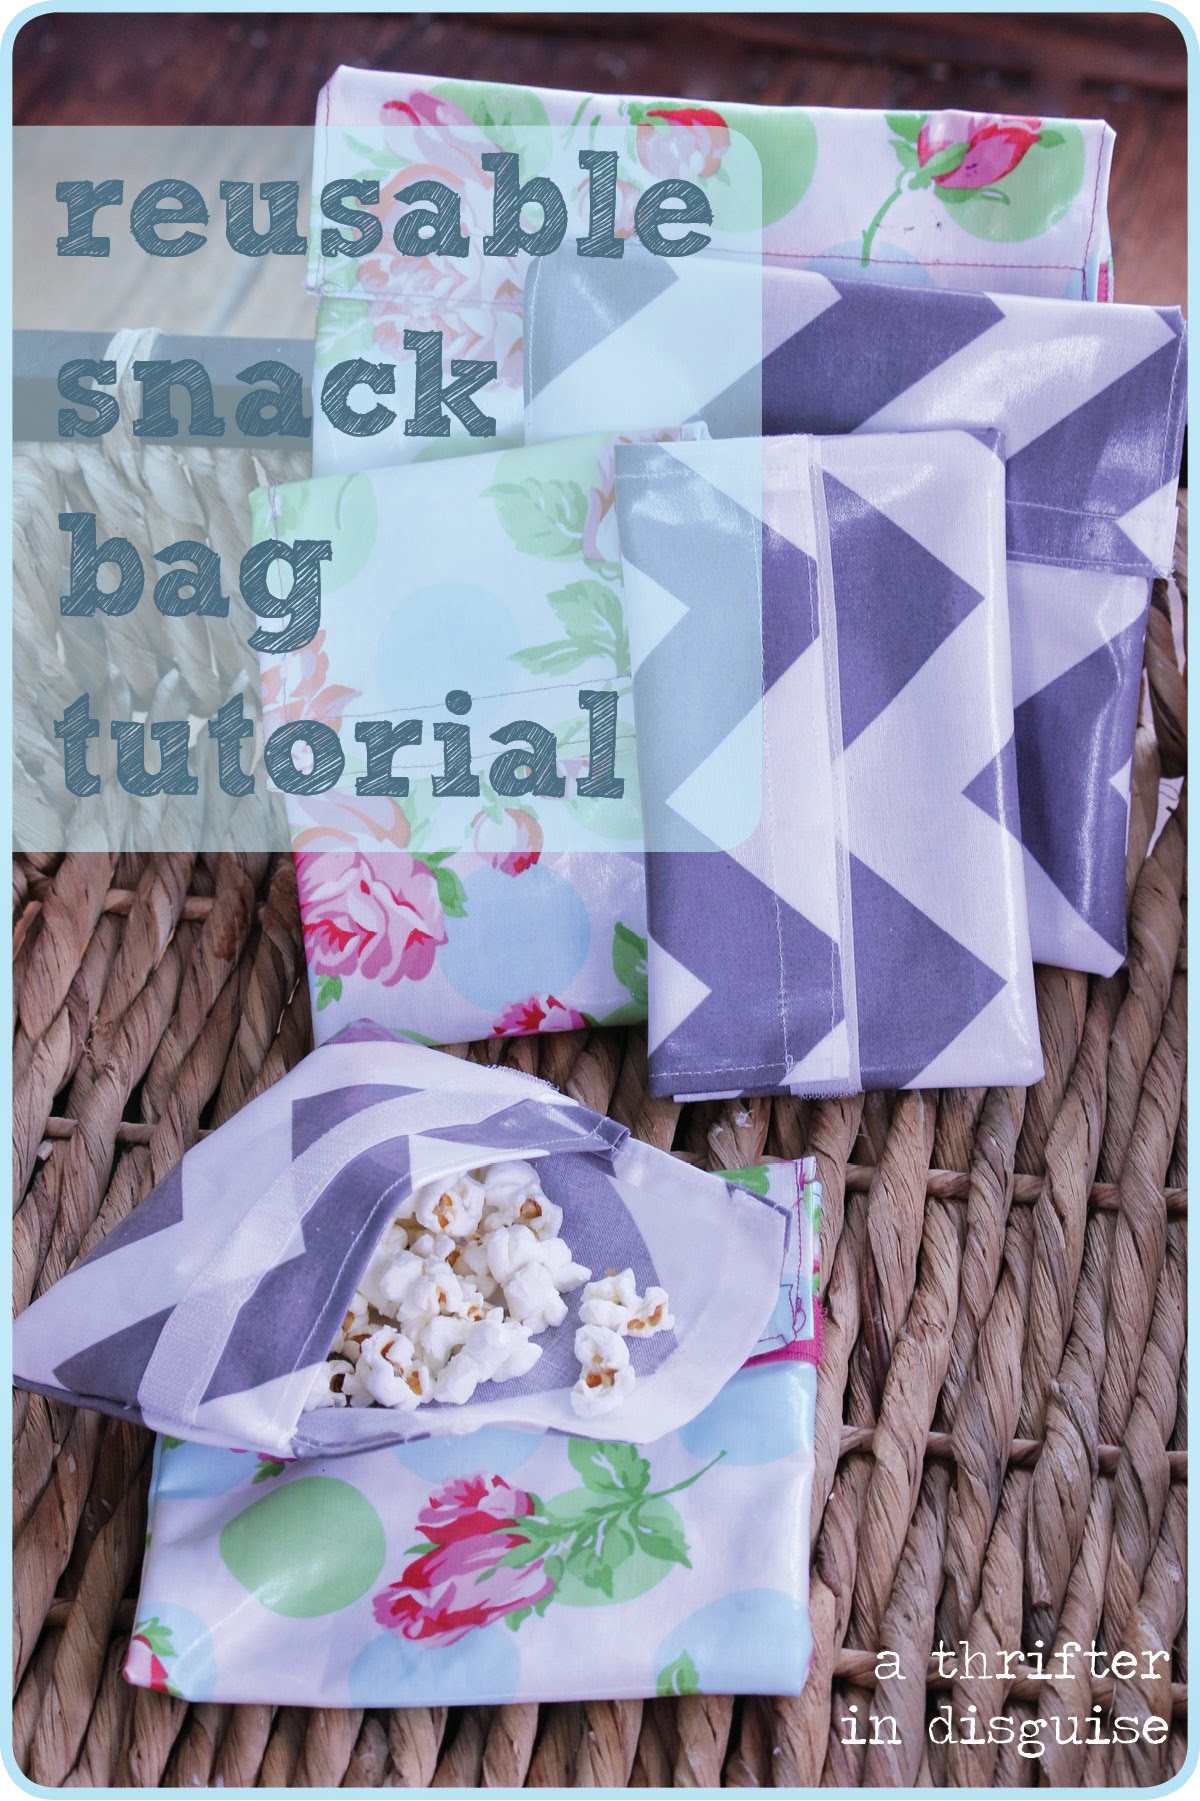 Reusable Snack Bag Pattern